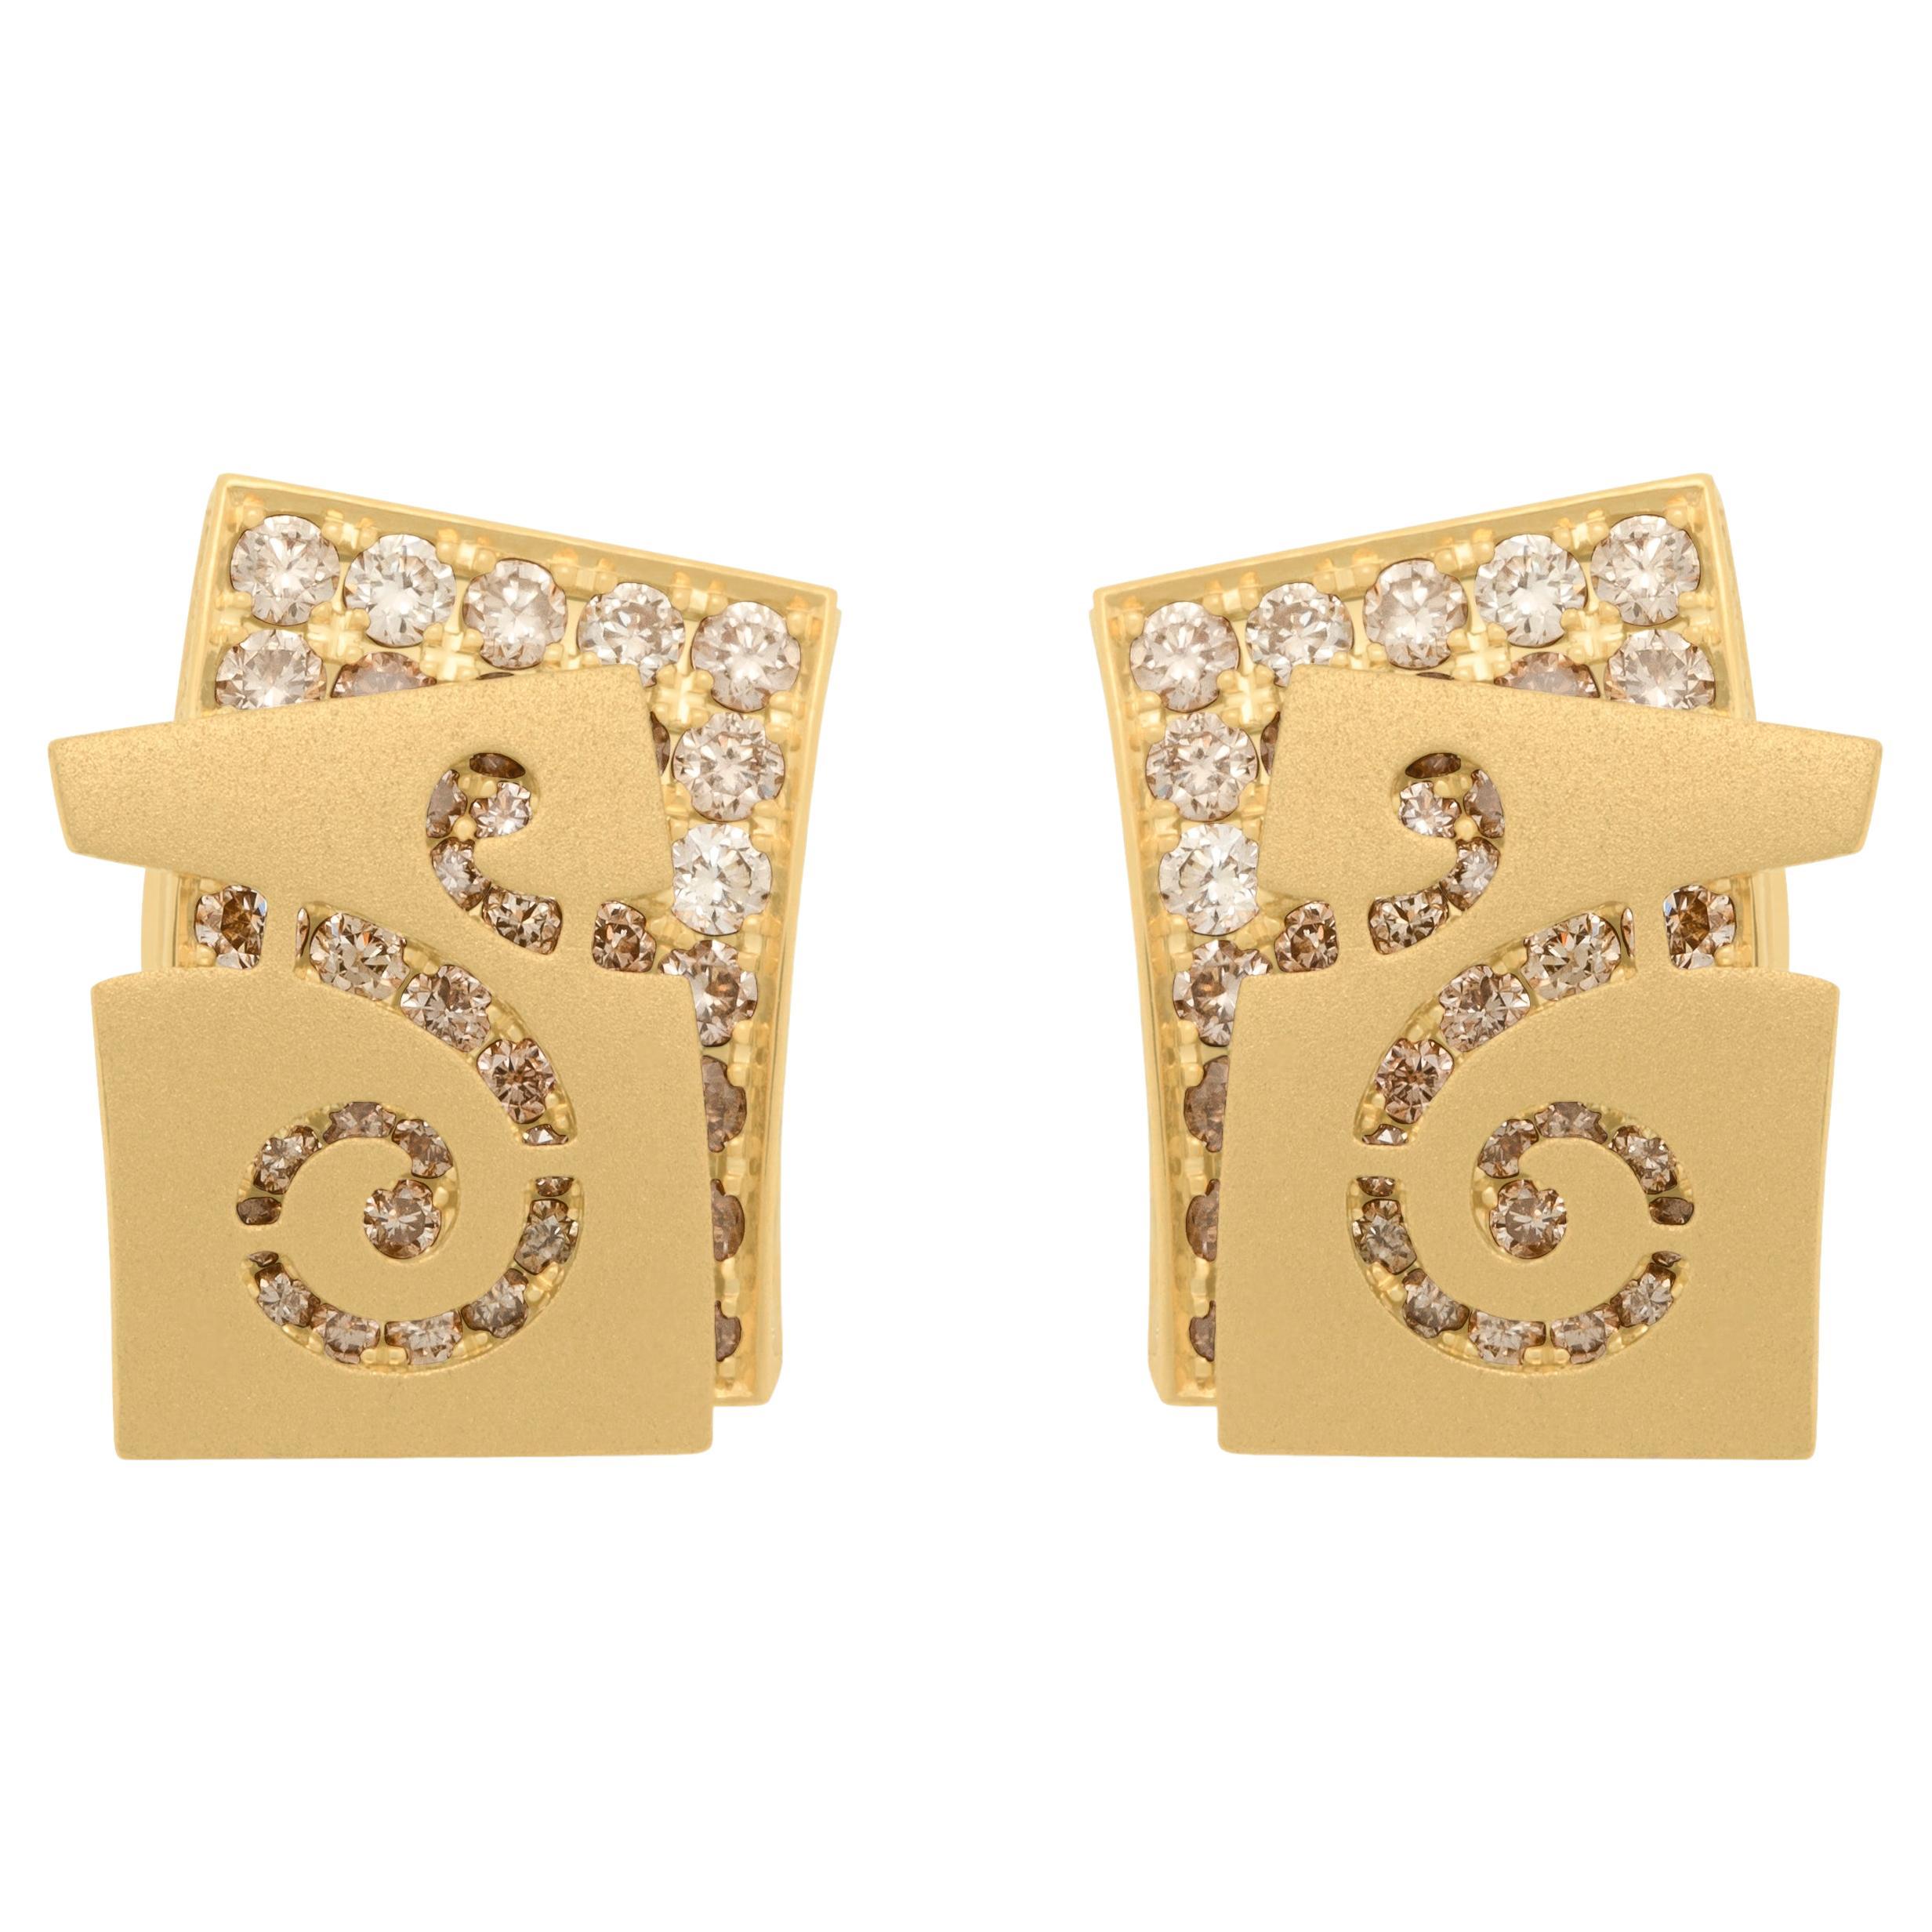 Champagne Diamonds 18 Karat Yellow Gold Studs Veil Earrings